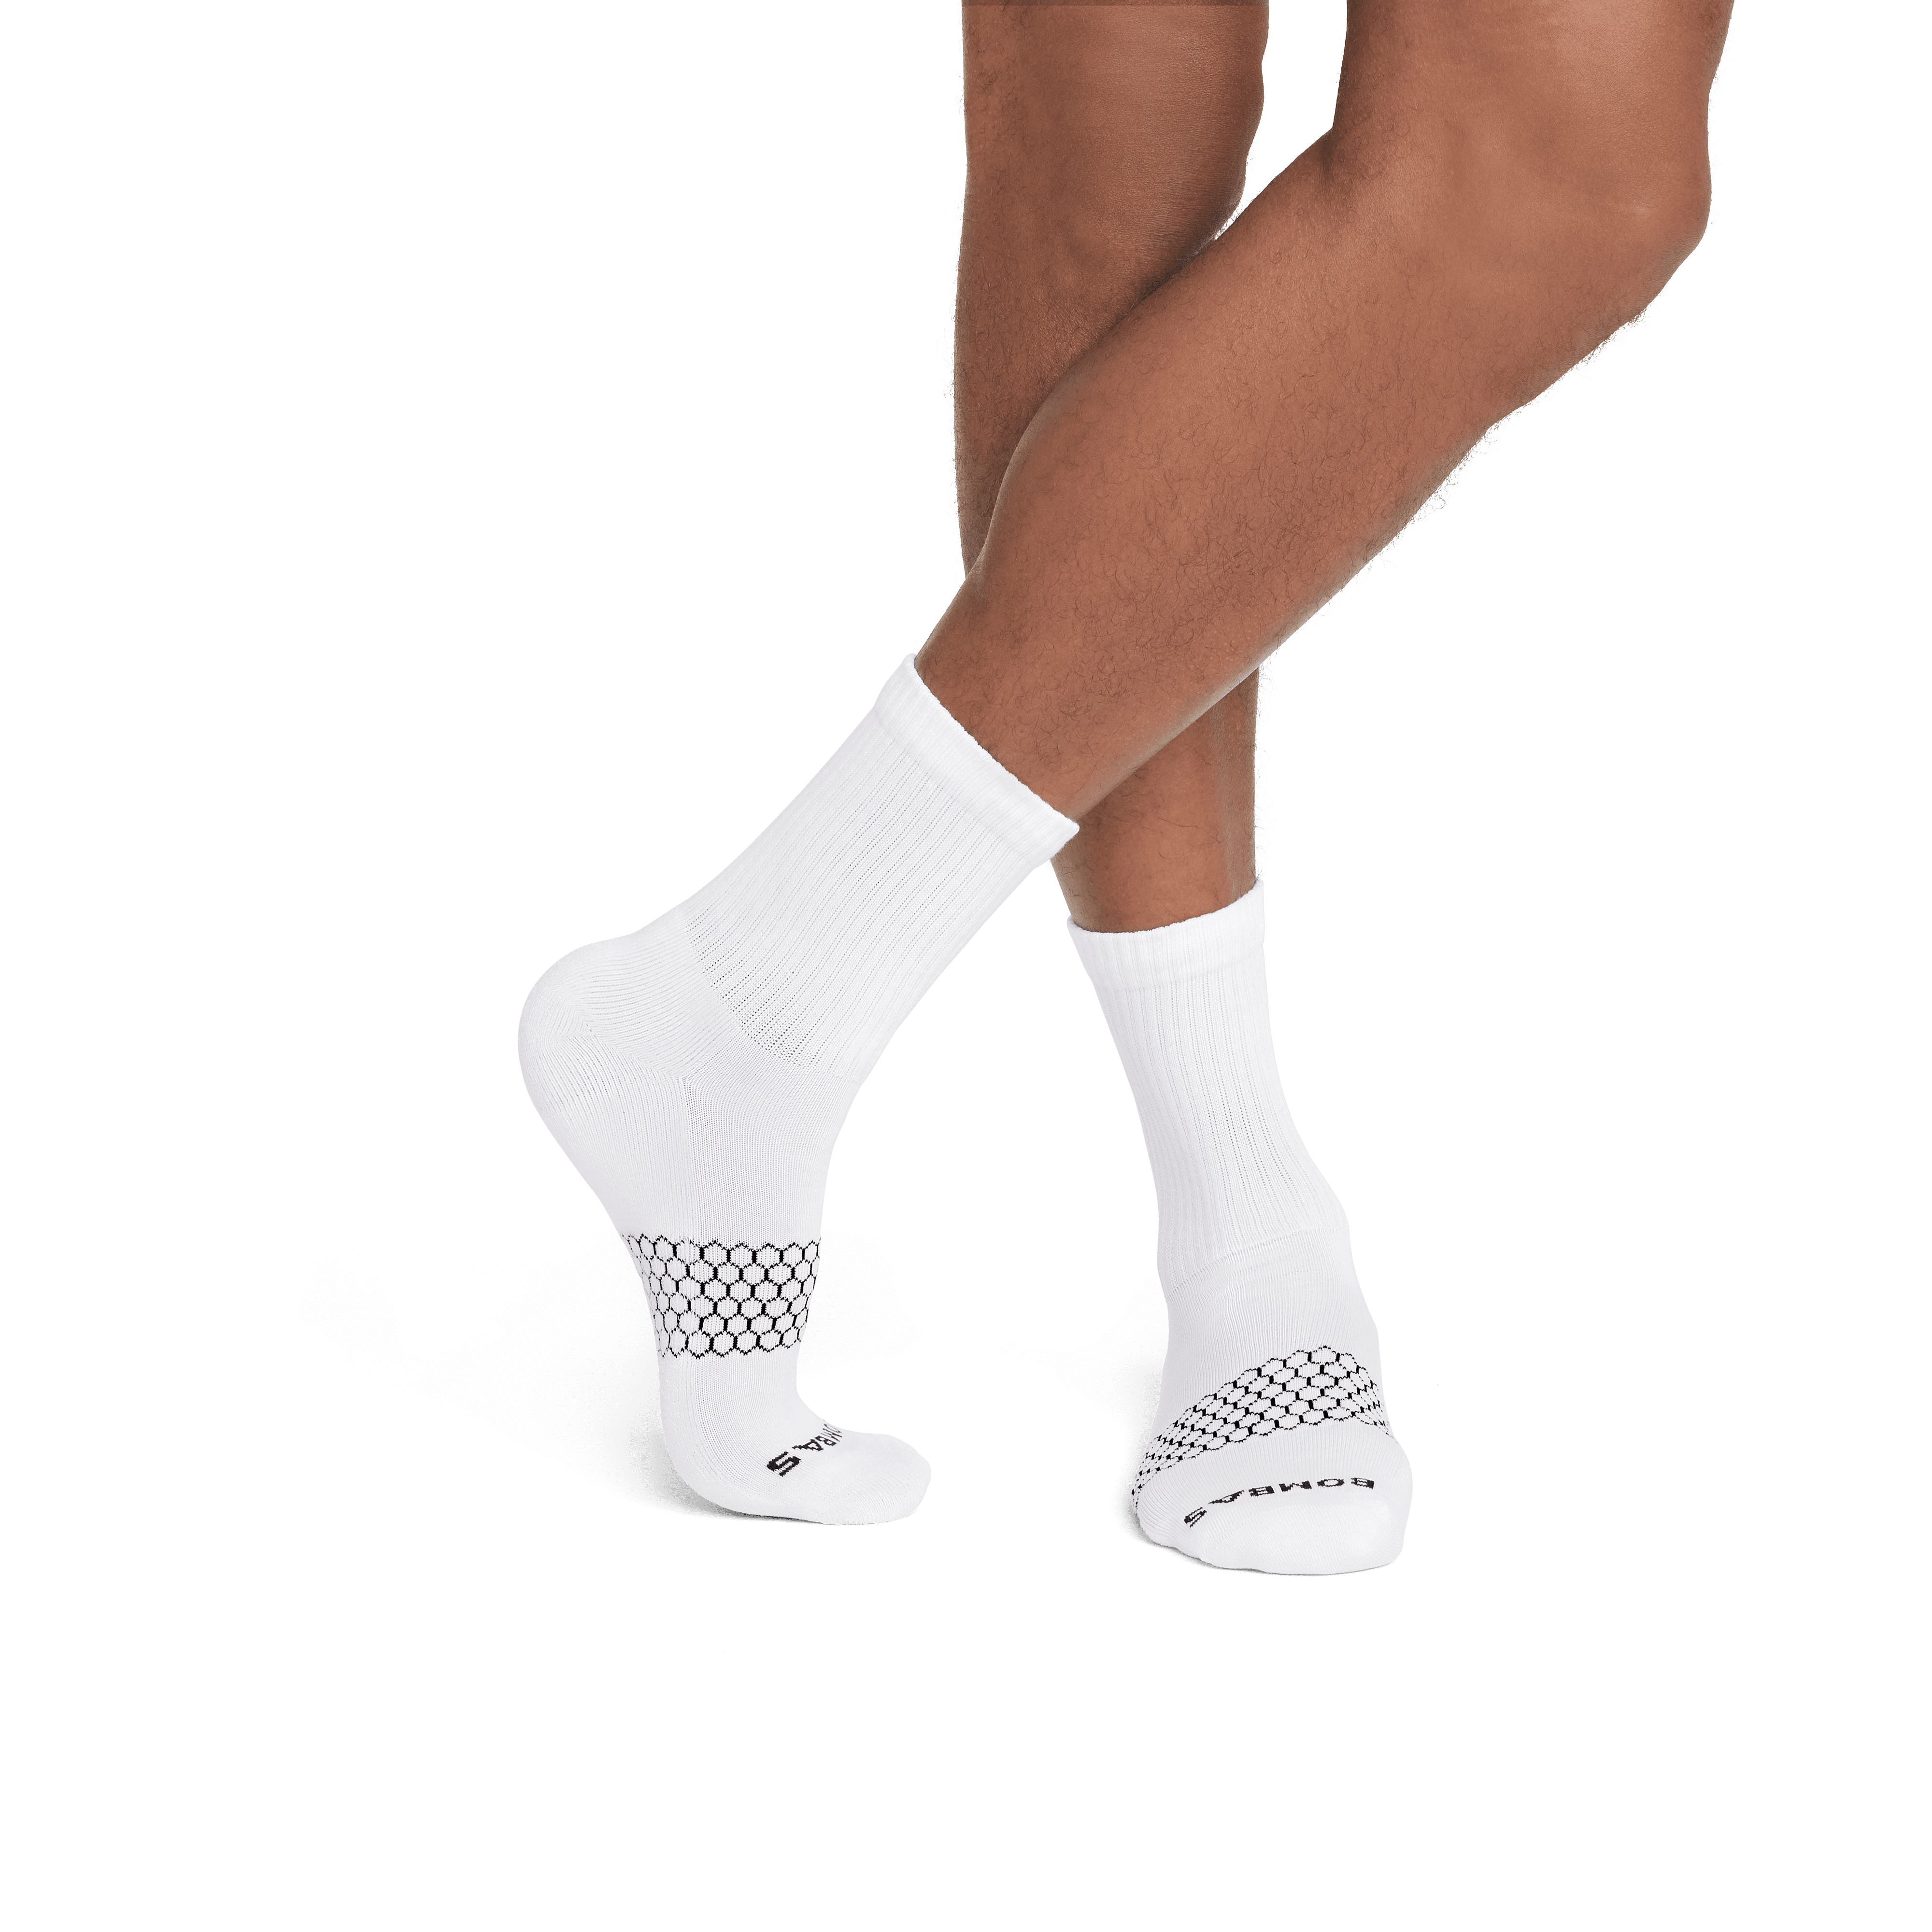 Irish Dance Socks, Stay-Up Poodle Socks